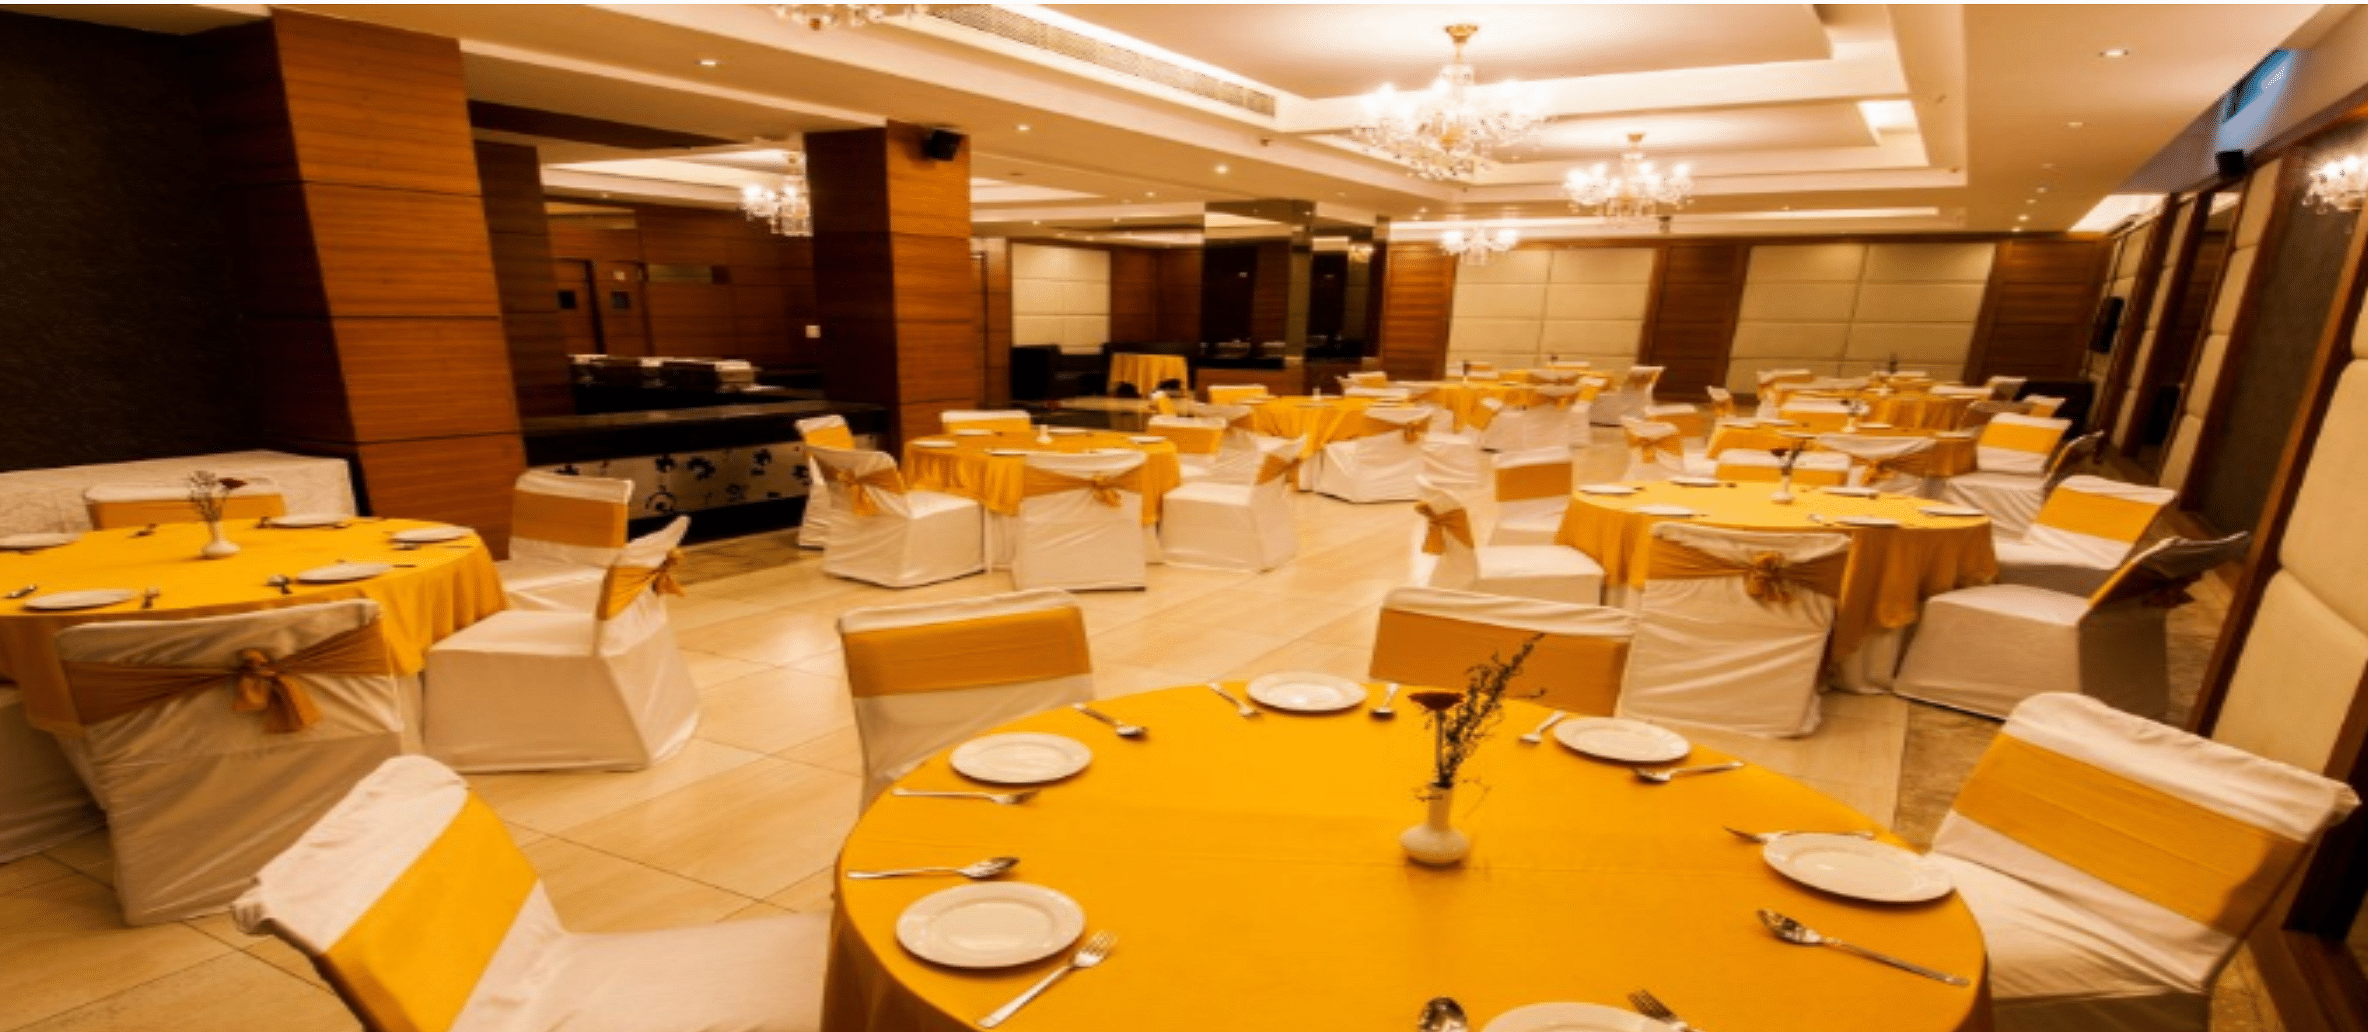 Hotel Ikhaya in Greater Kailash 1, Delhi